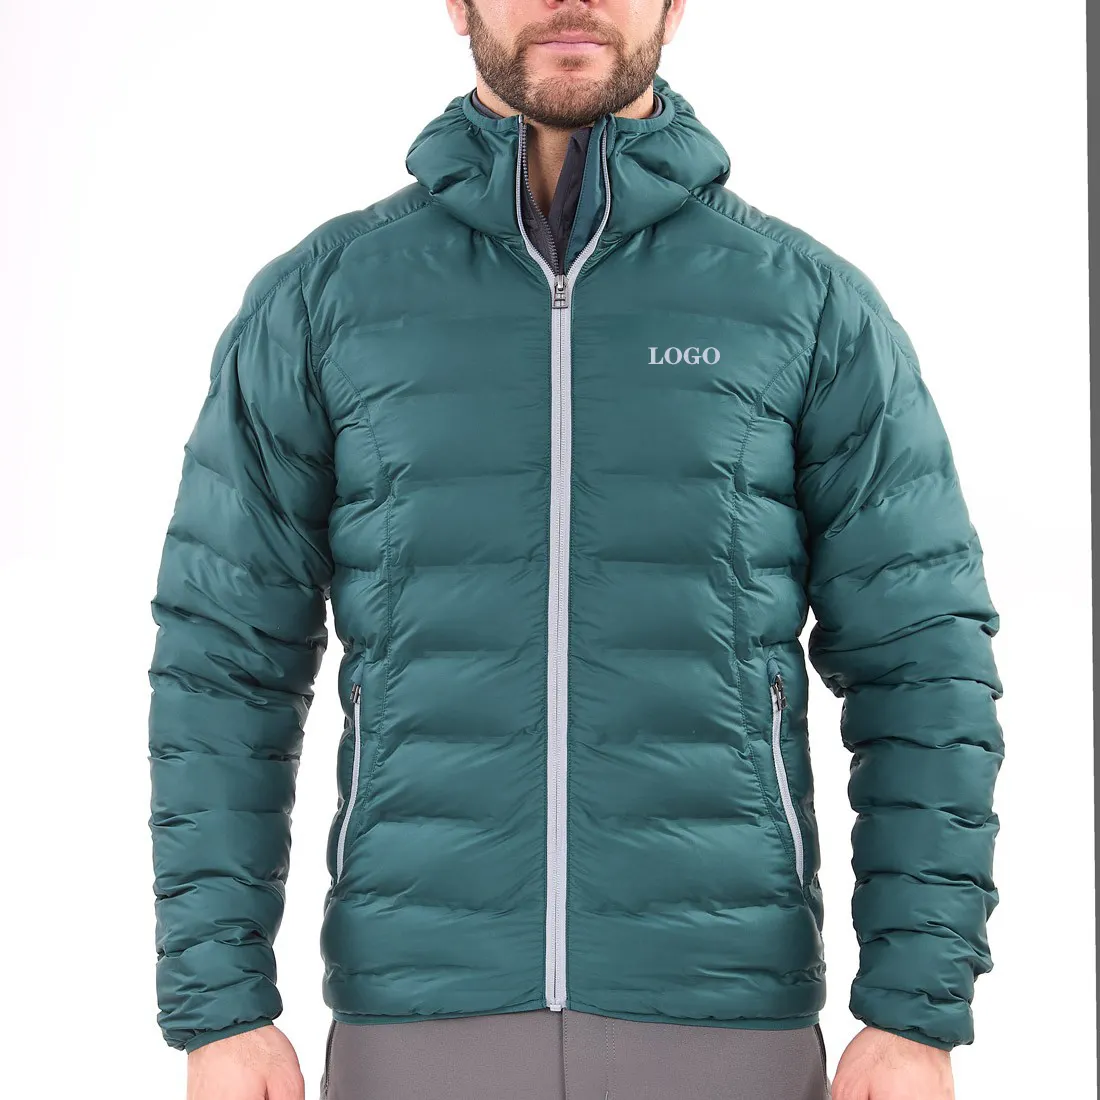 Factory価格入りの冬のジャケット暖かい防水ダウン男とリサイクル繊維